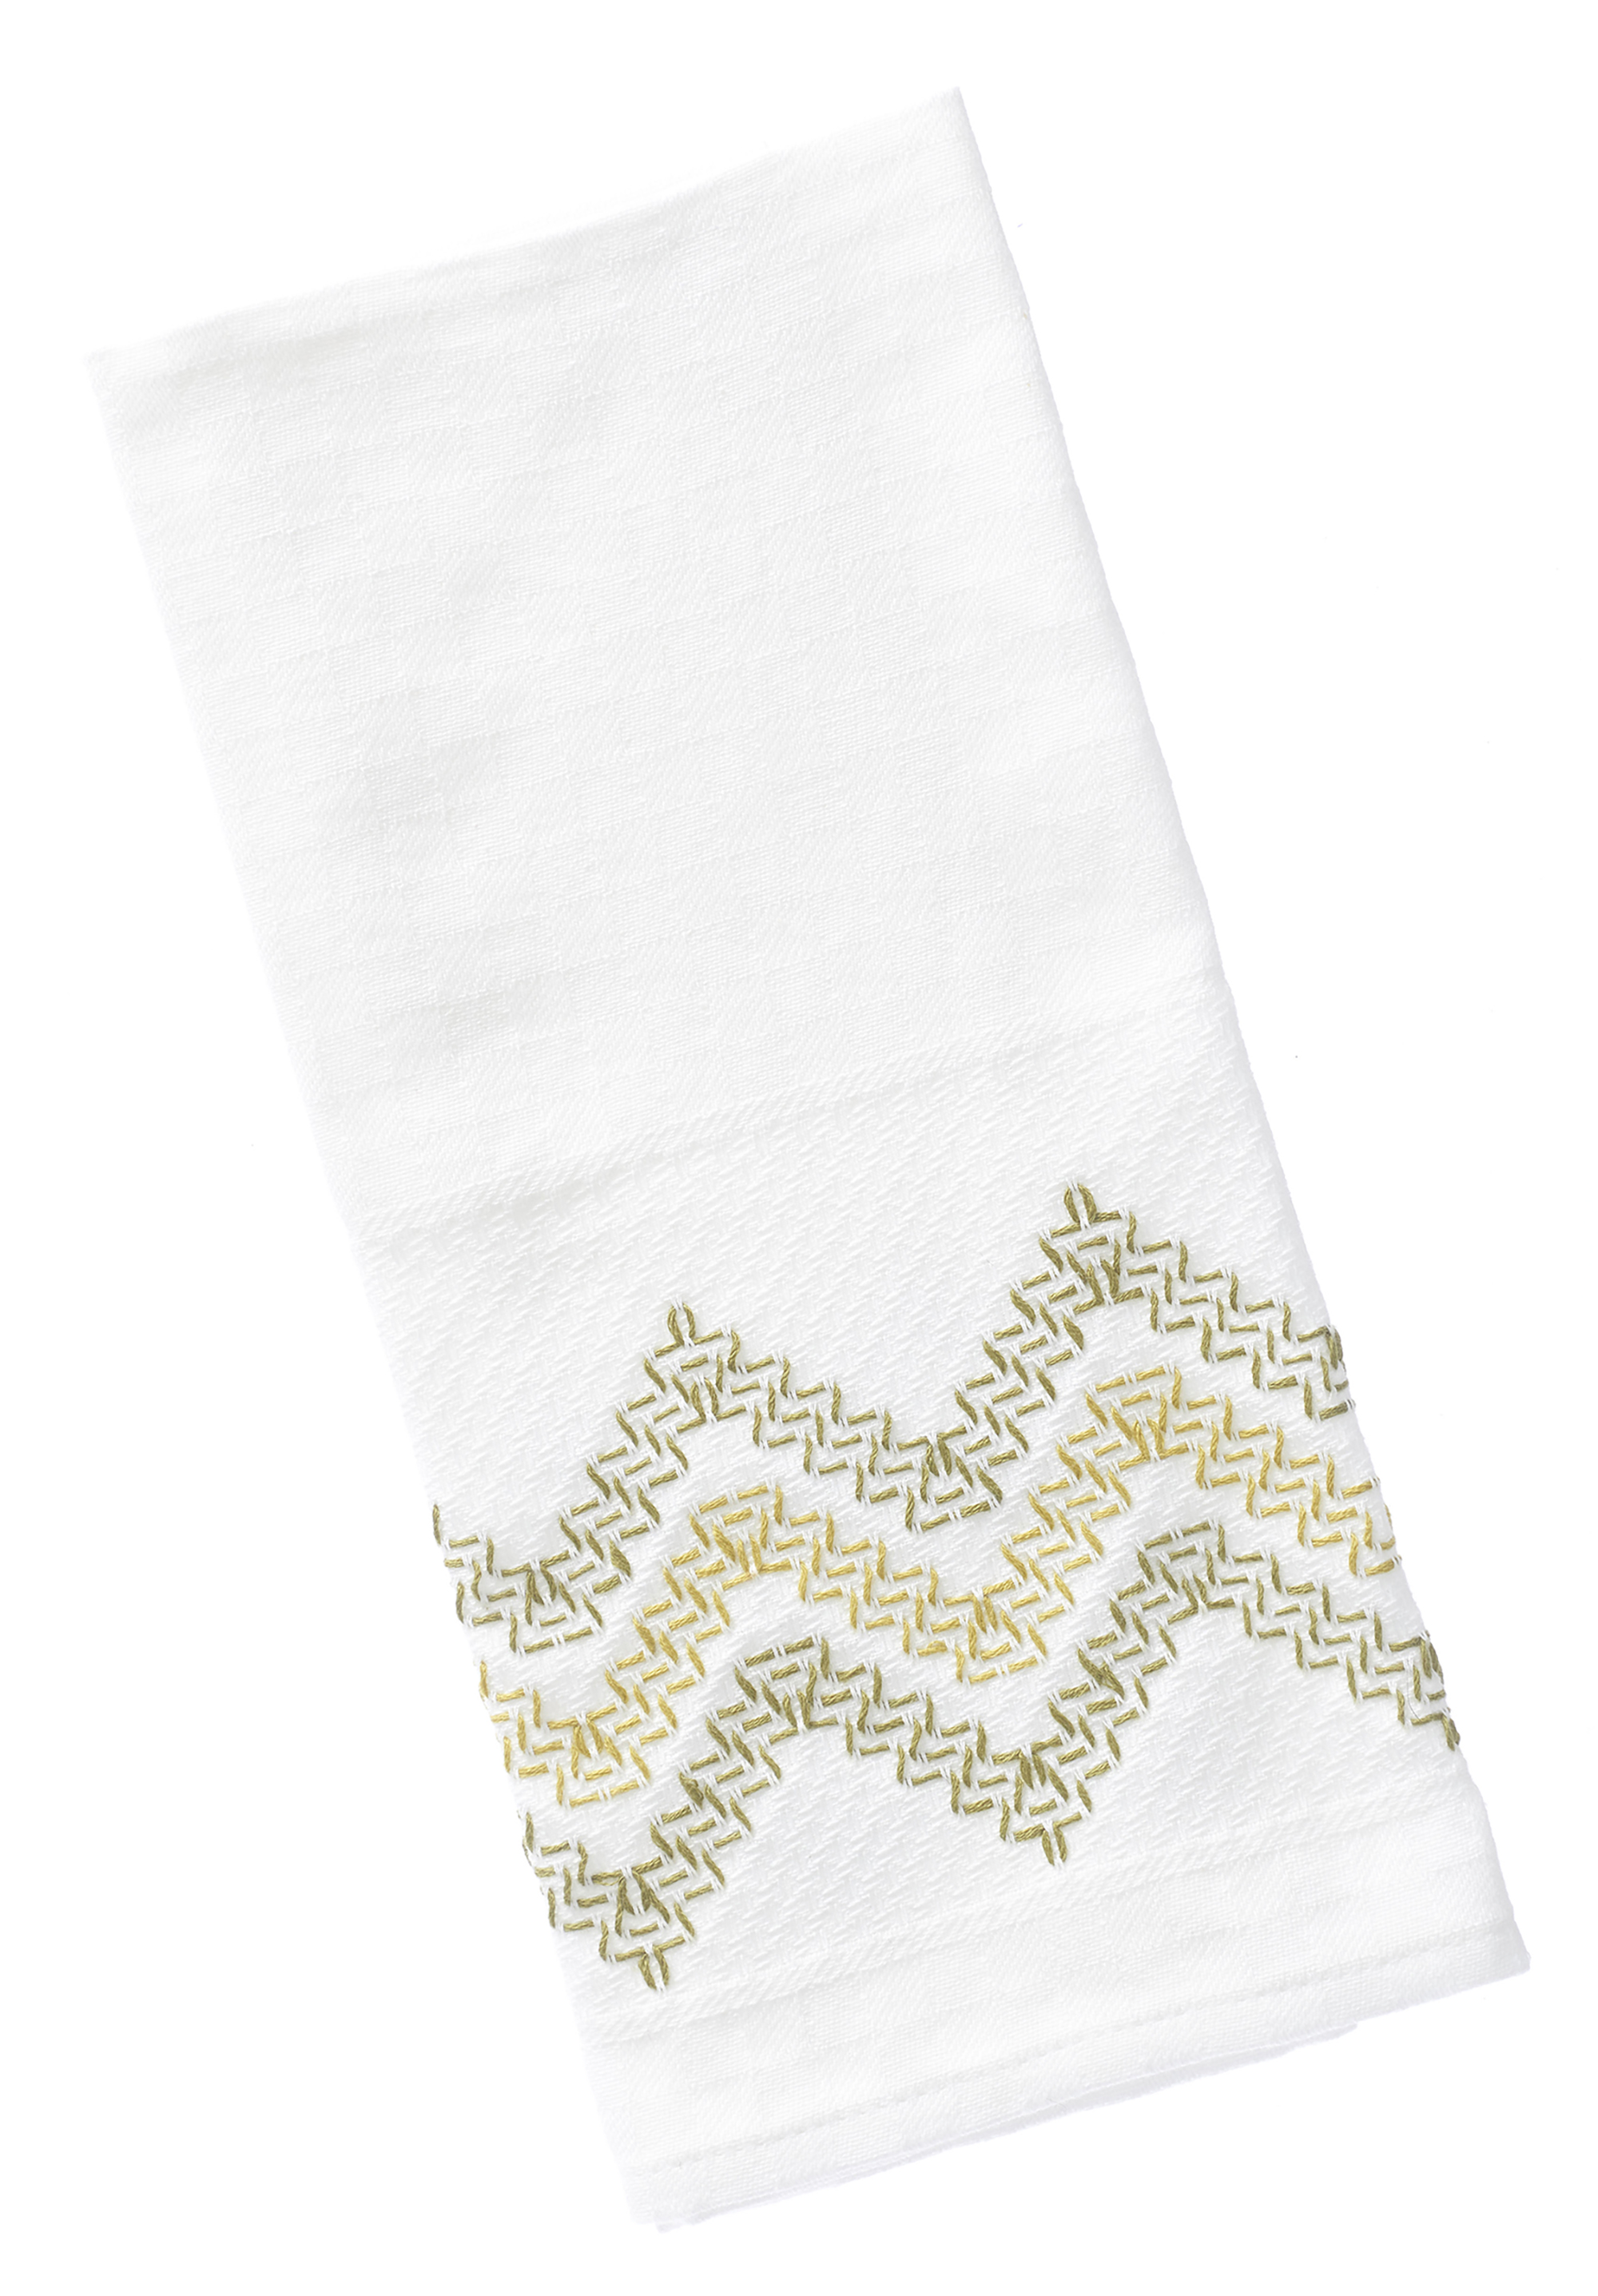 ePattern Swedish Weave Towels Reflections - Leisure Arts